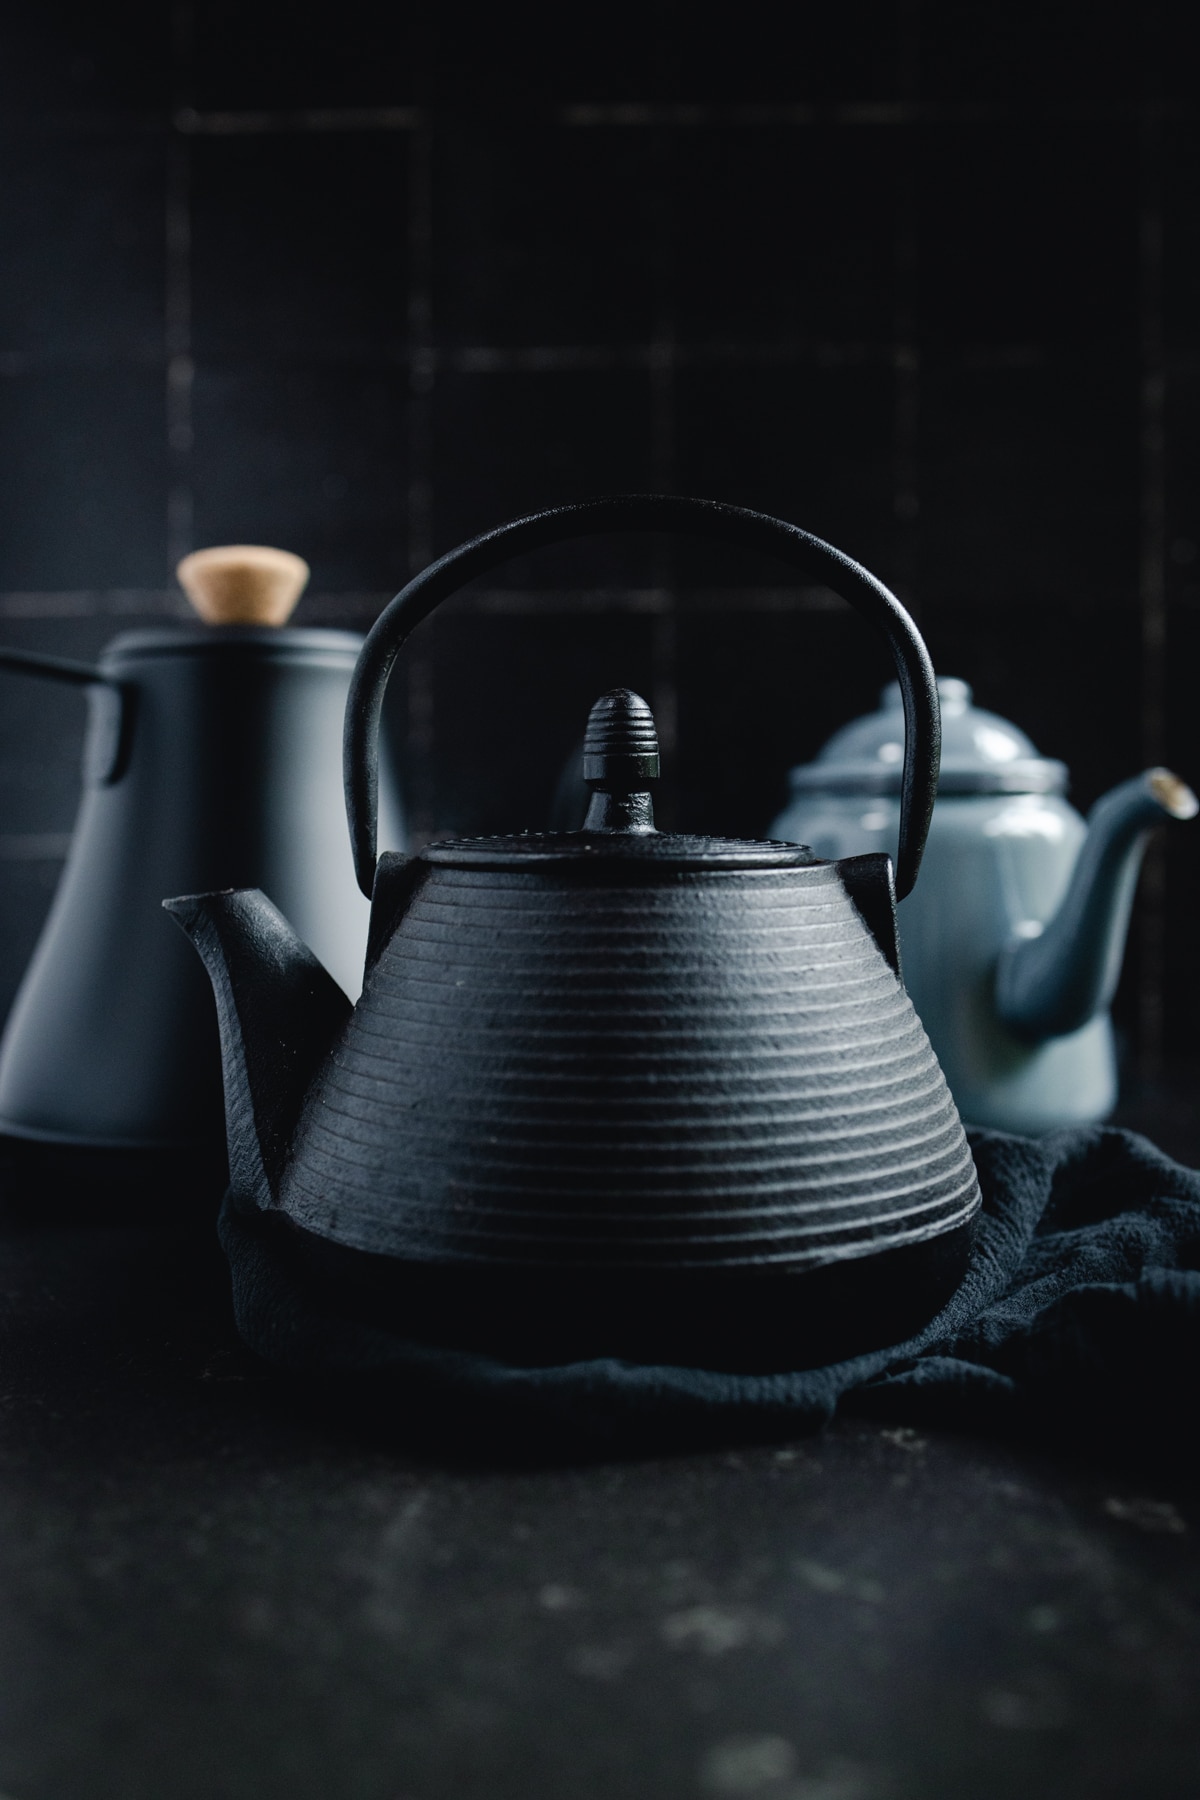 The 35 Best Non Toxic Tea Kettles